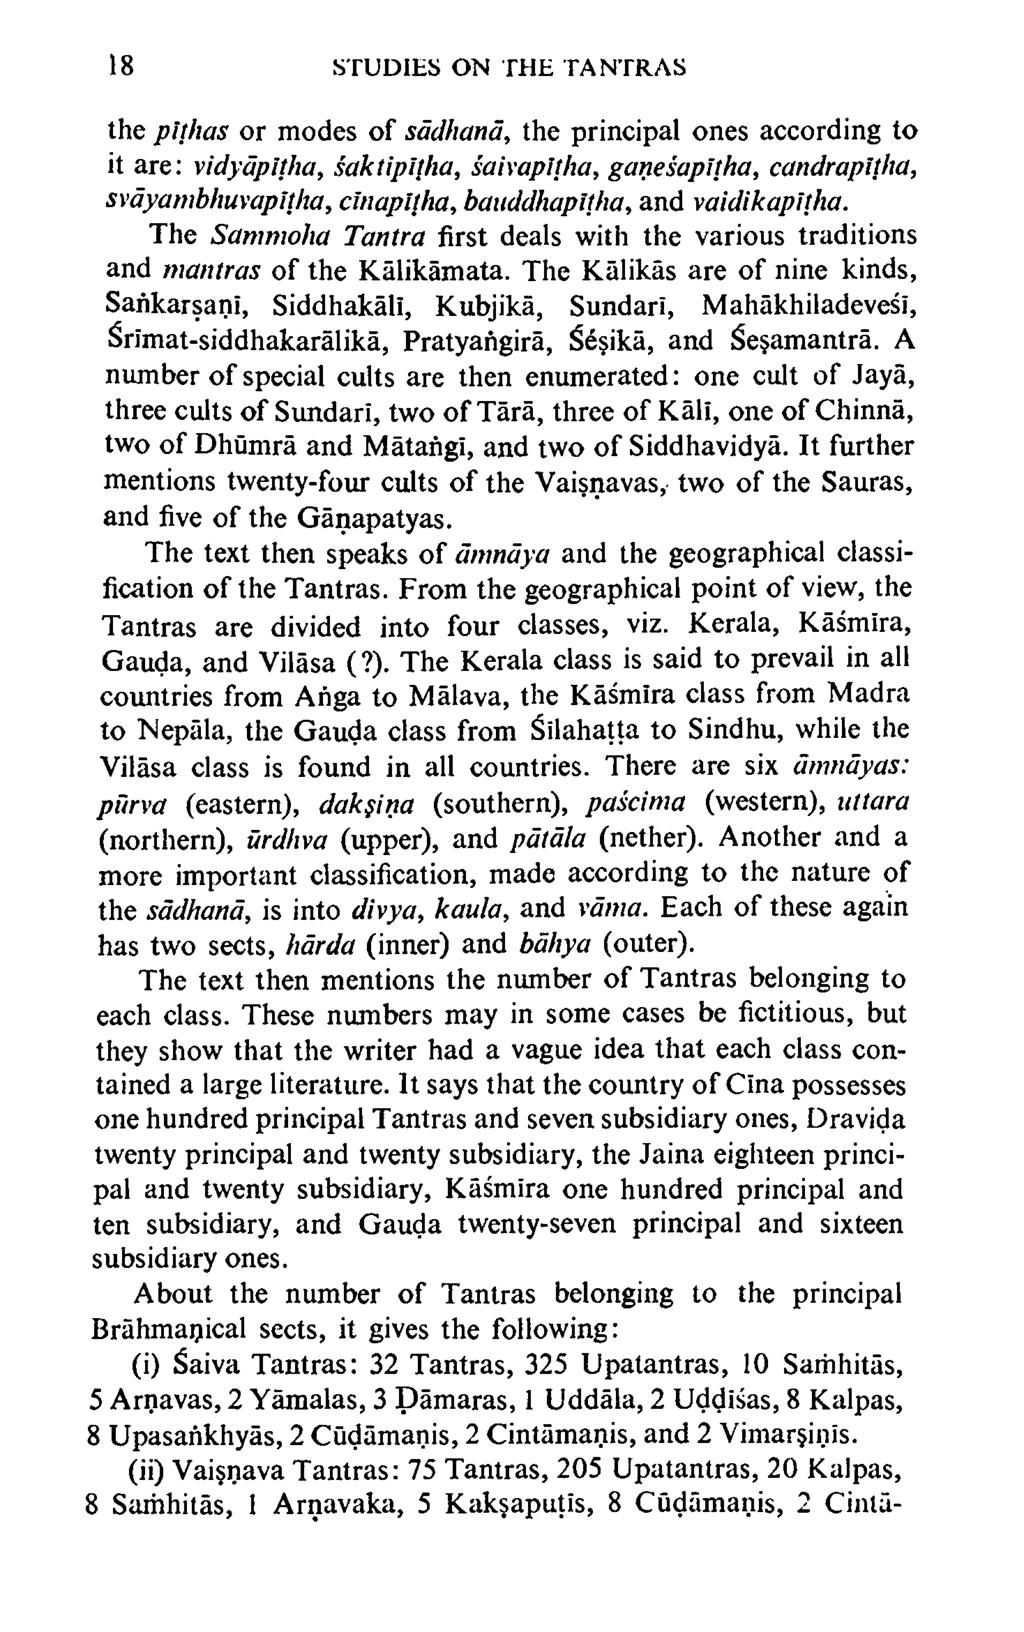 18 STUDIES ON THE TANTRAS the pithas or modes of sadhana, the principal ones according to it are: vidydpitha, saktipi\ha, saivapltha, ganesapitha, candrapitha, svayambhuvapltha, cinapitha,